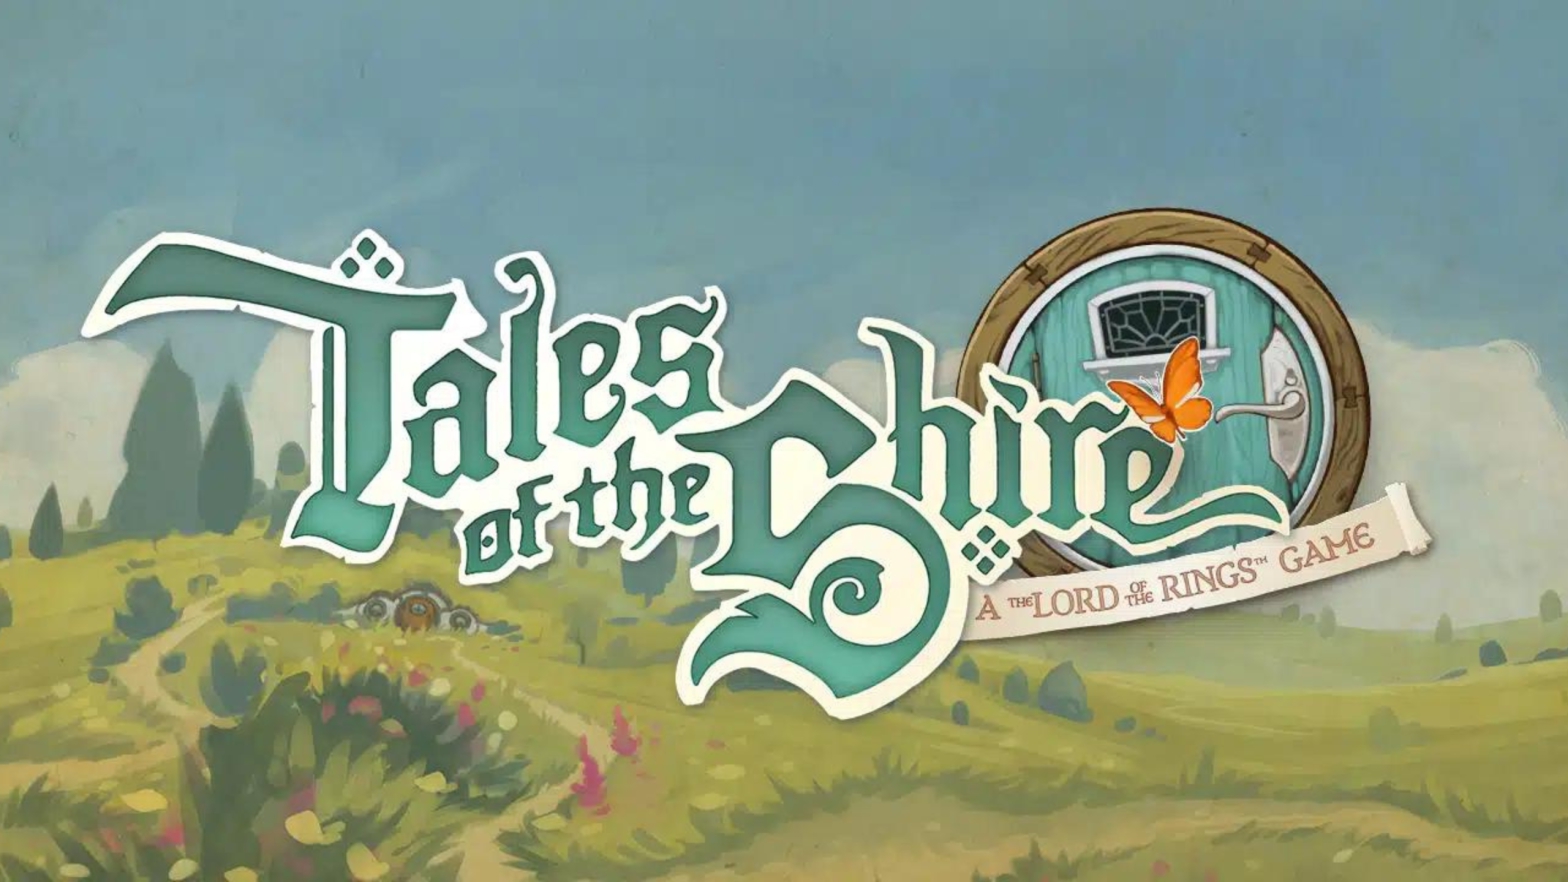 Tales of the Shire: A Lord of the Rings Game annunciato per PC e console con un teaser trailer